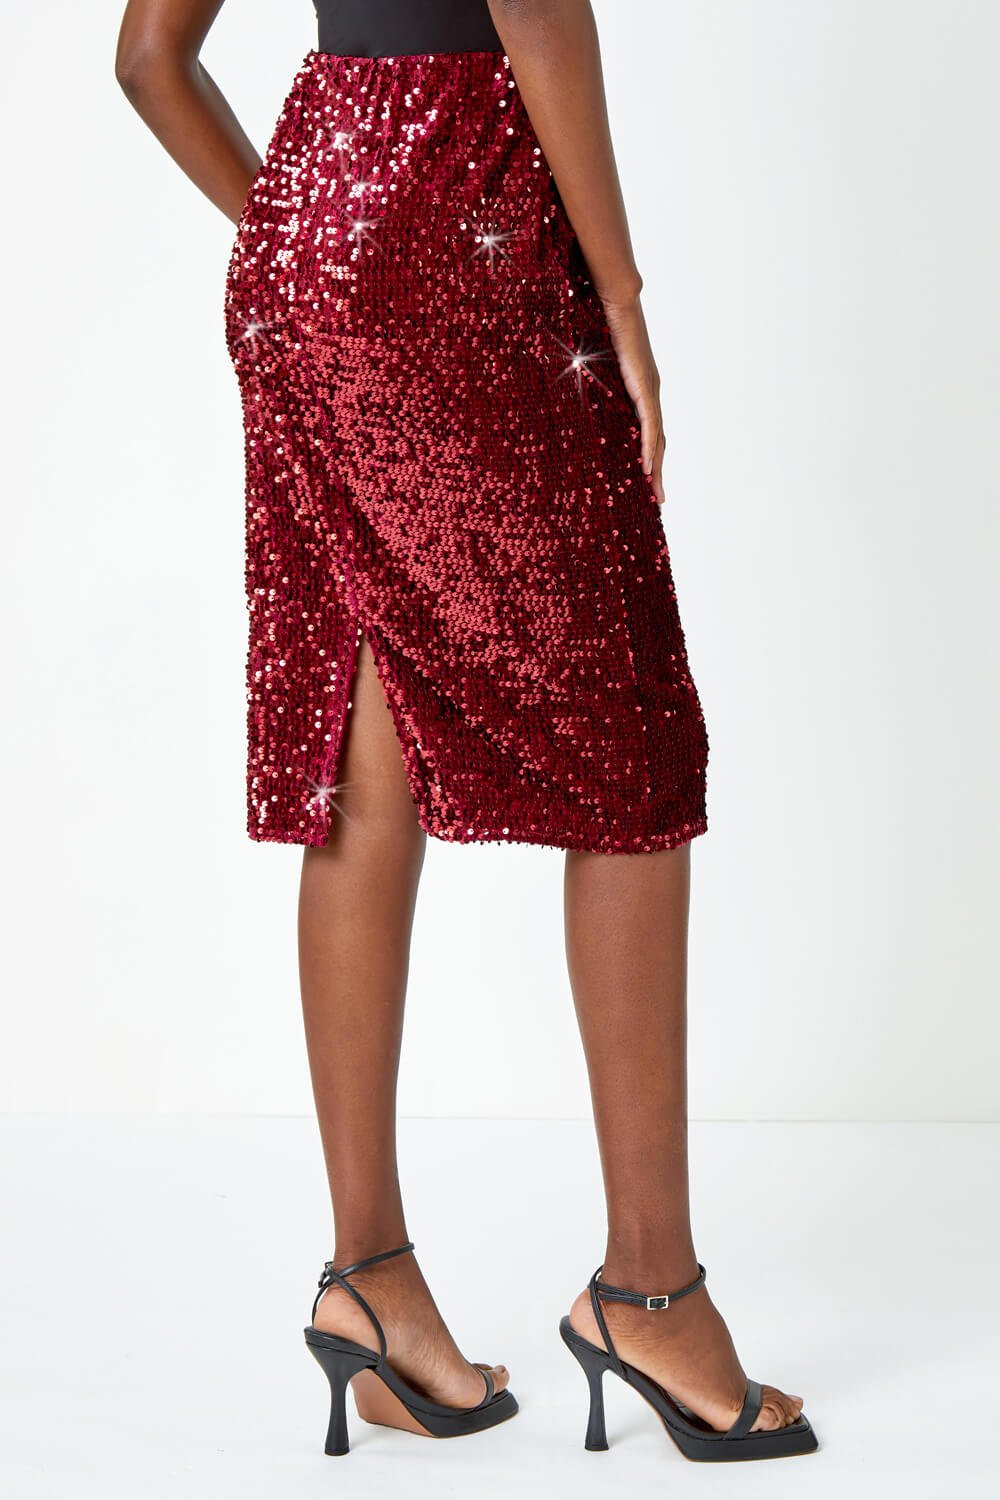 Red Sequin Embellished Velour Stretch Skirt, Image 4 of 5